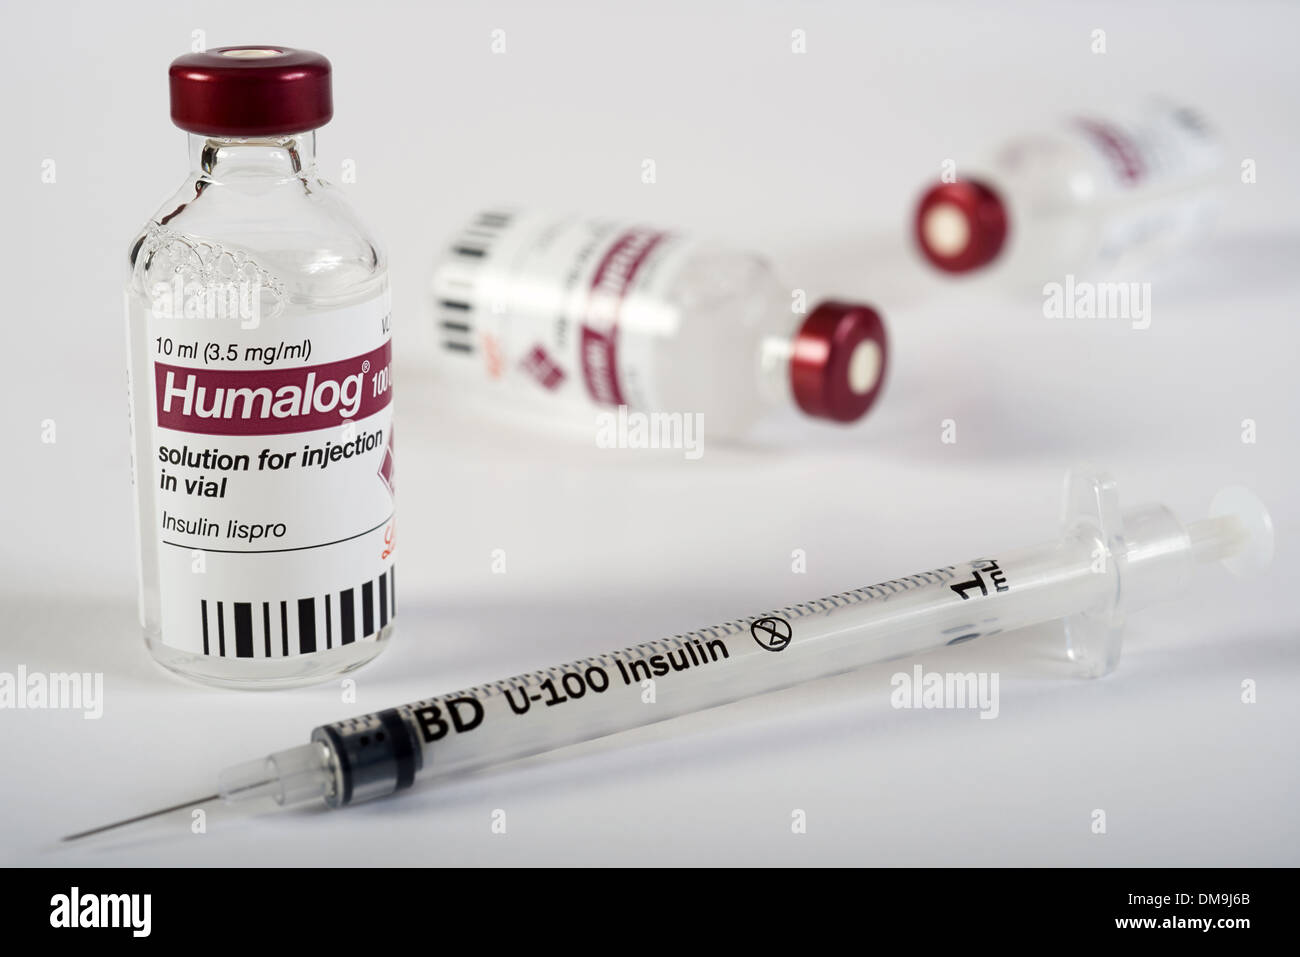 Humalog insulin lispro 10 ml bottles Stock Photo